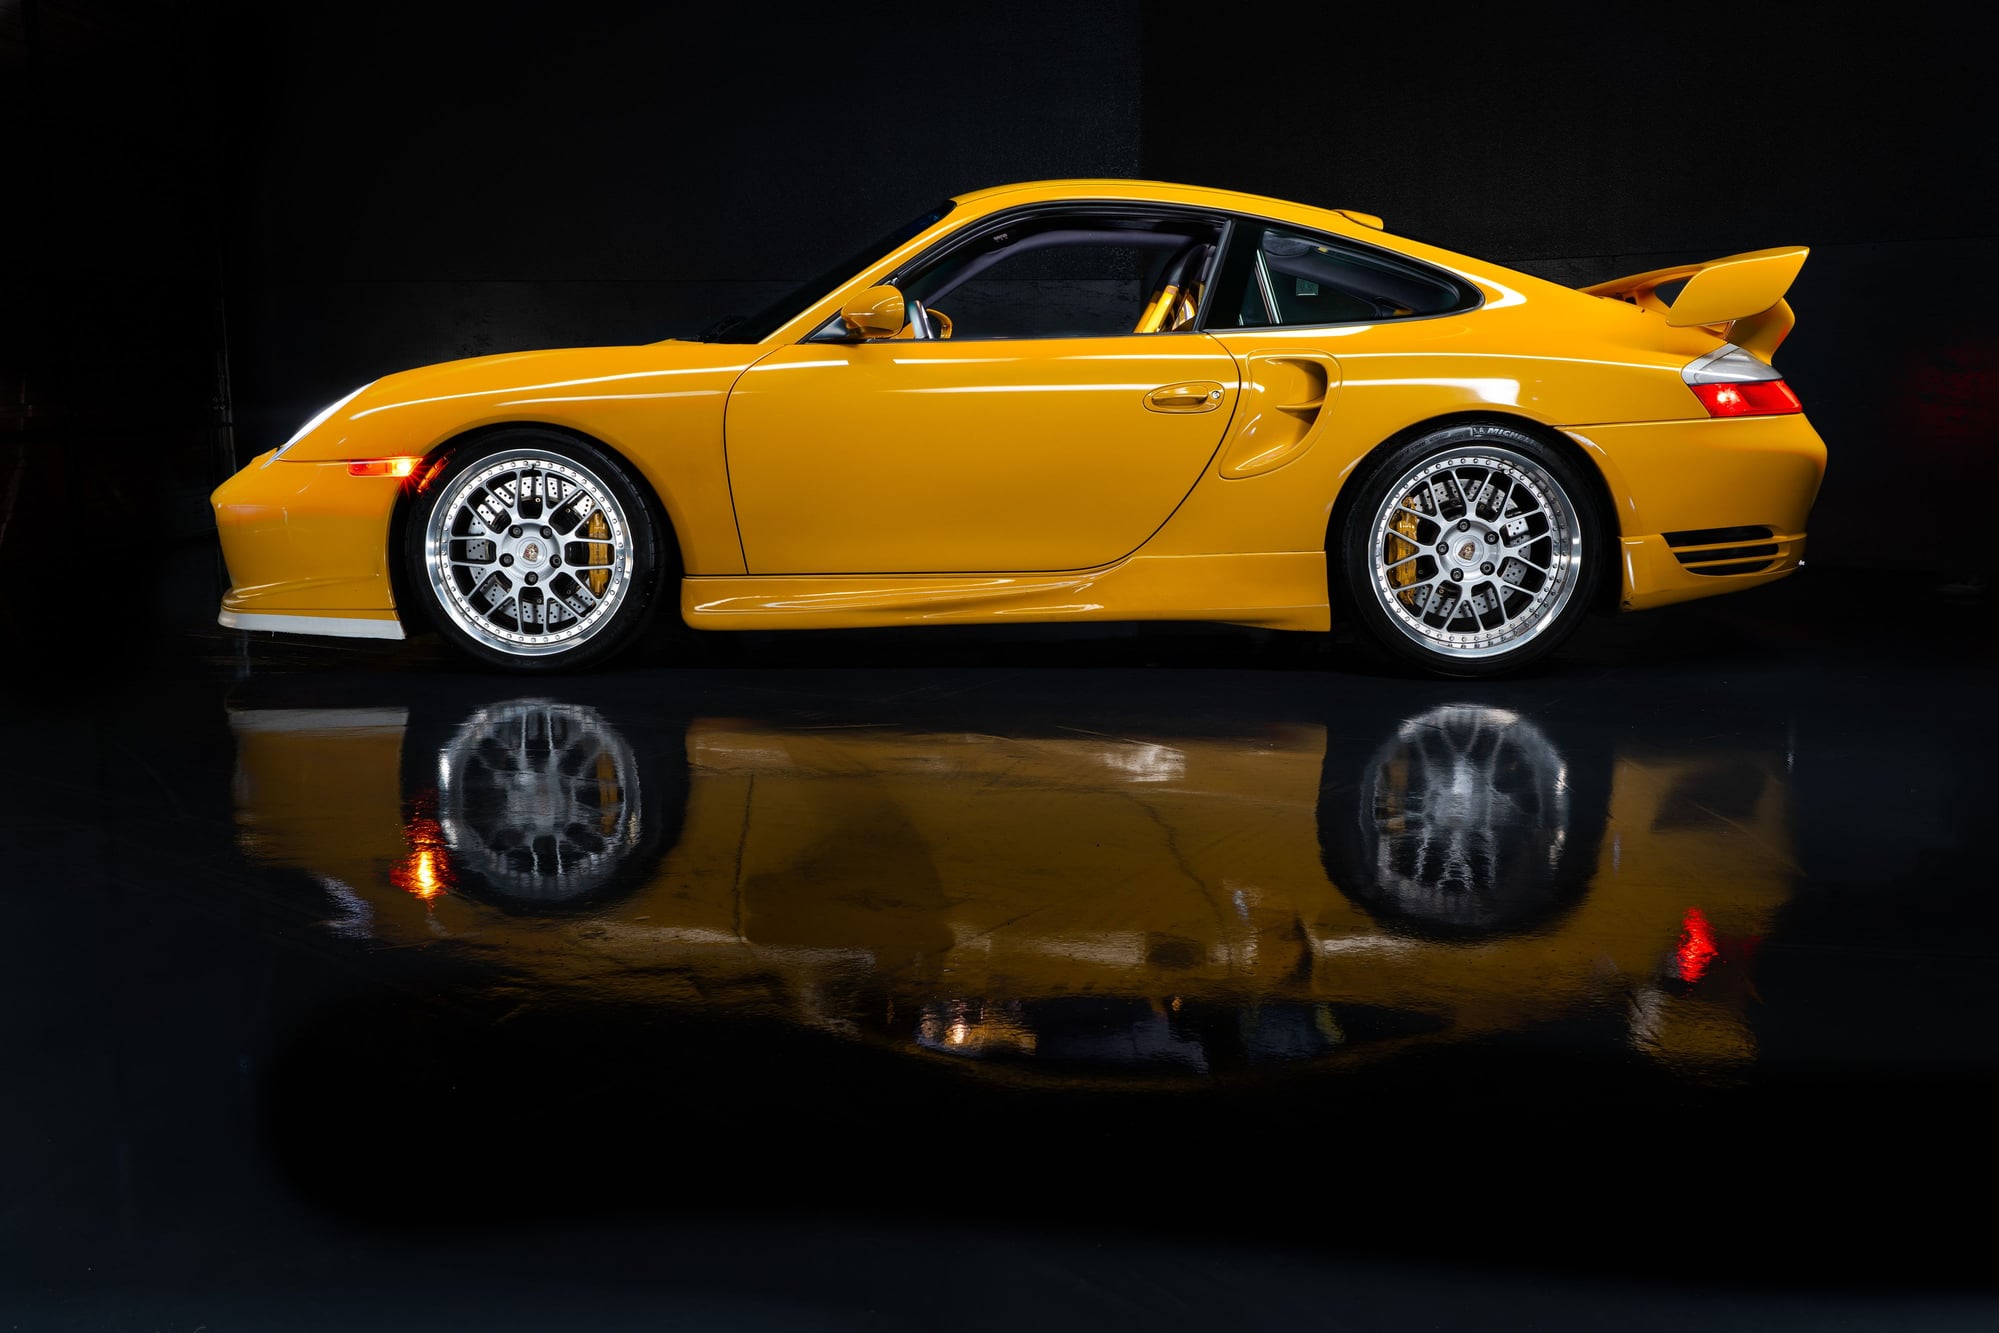 2001 Shark Werks Speed Yellow 911 Turbo on Bring a Trailer 